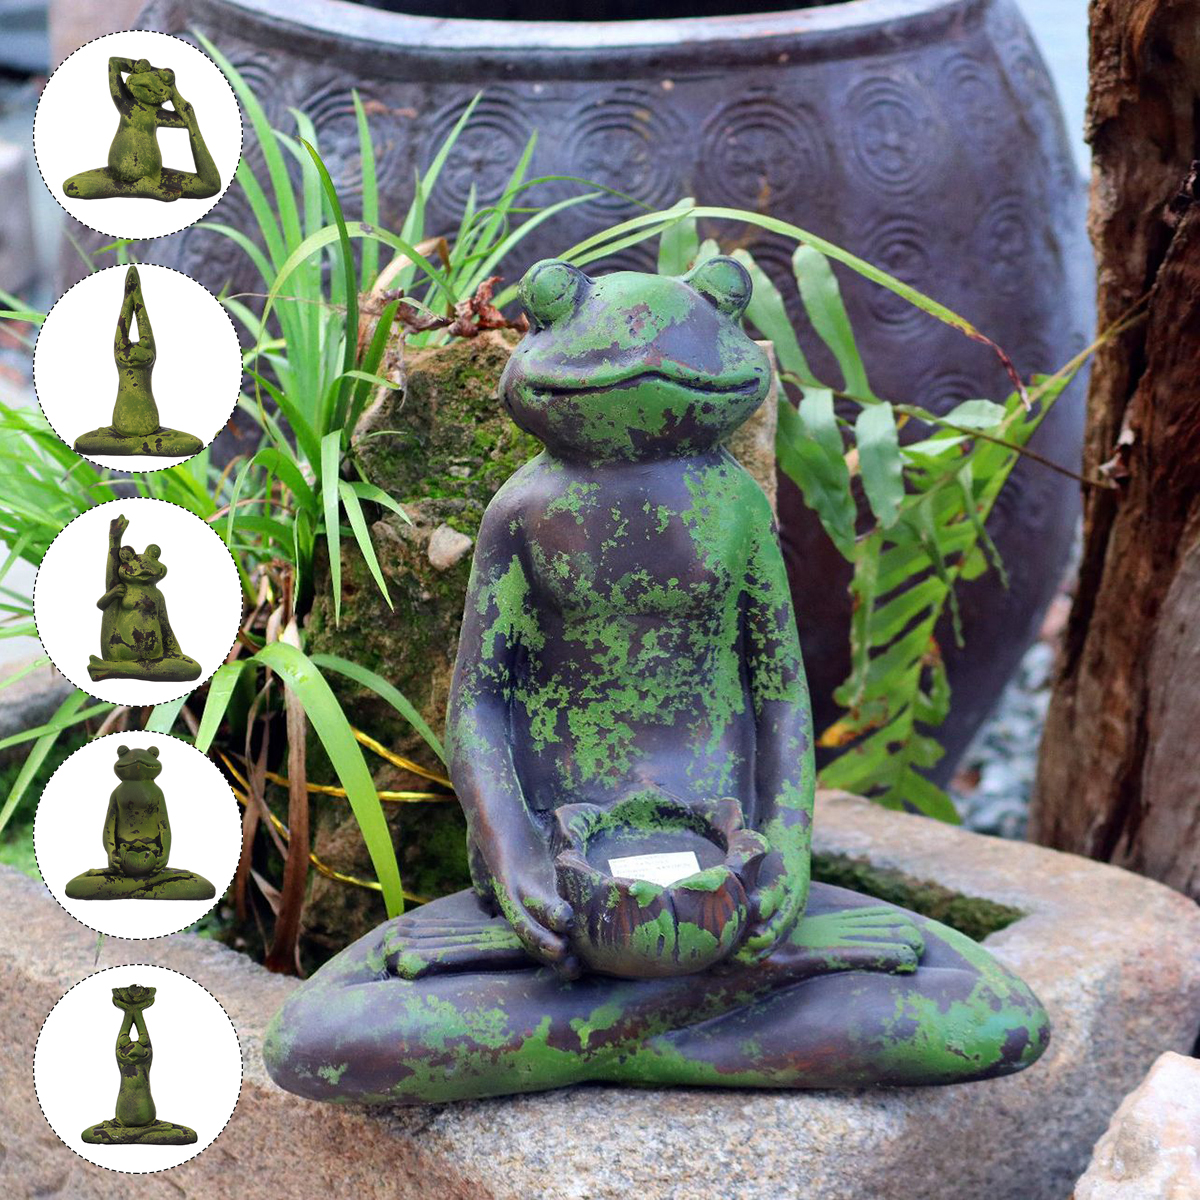 Micro-landscape-Frog-Figurines-Miniatures-Garden-Terrariums-Bonsai-Home-Decoration-1726326-1